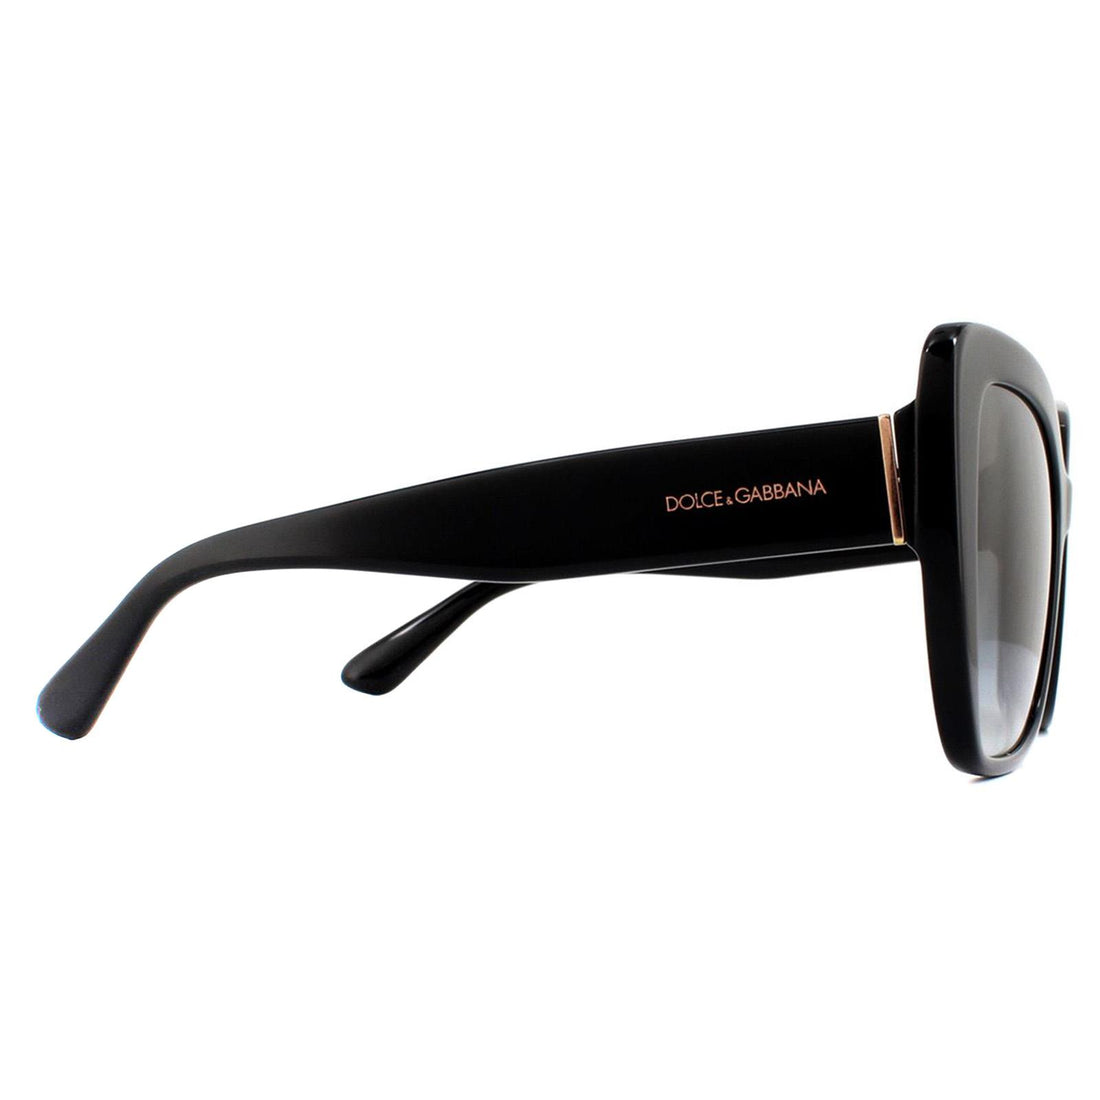 Dolce & Gabbana Sunglasses DG4348 501/8G Black Grey Gradient